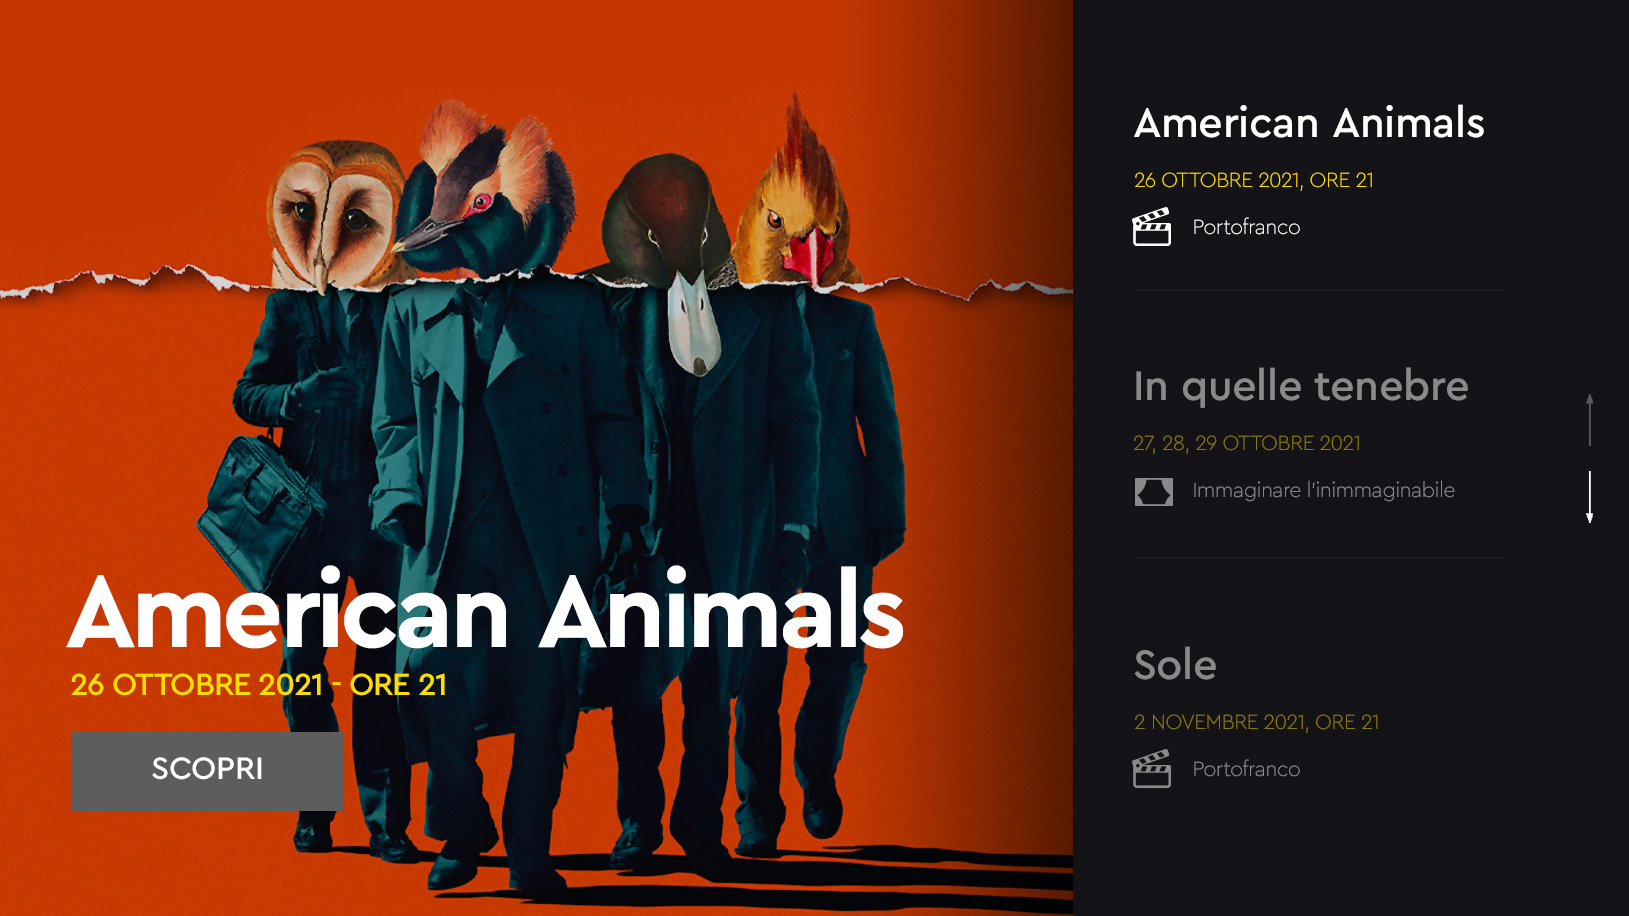 Portofranco: American Animals